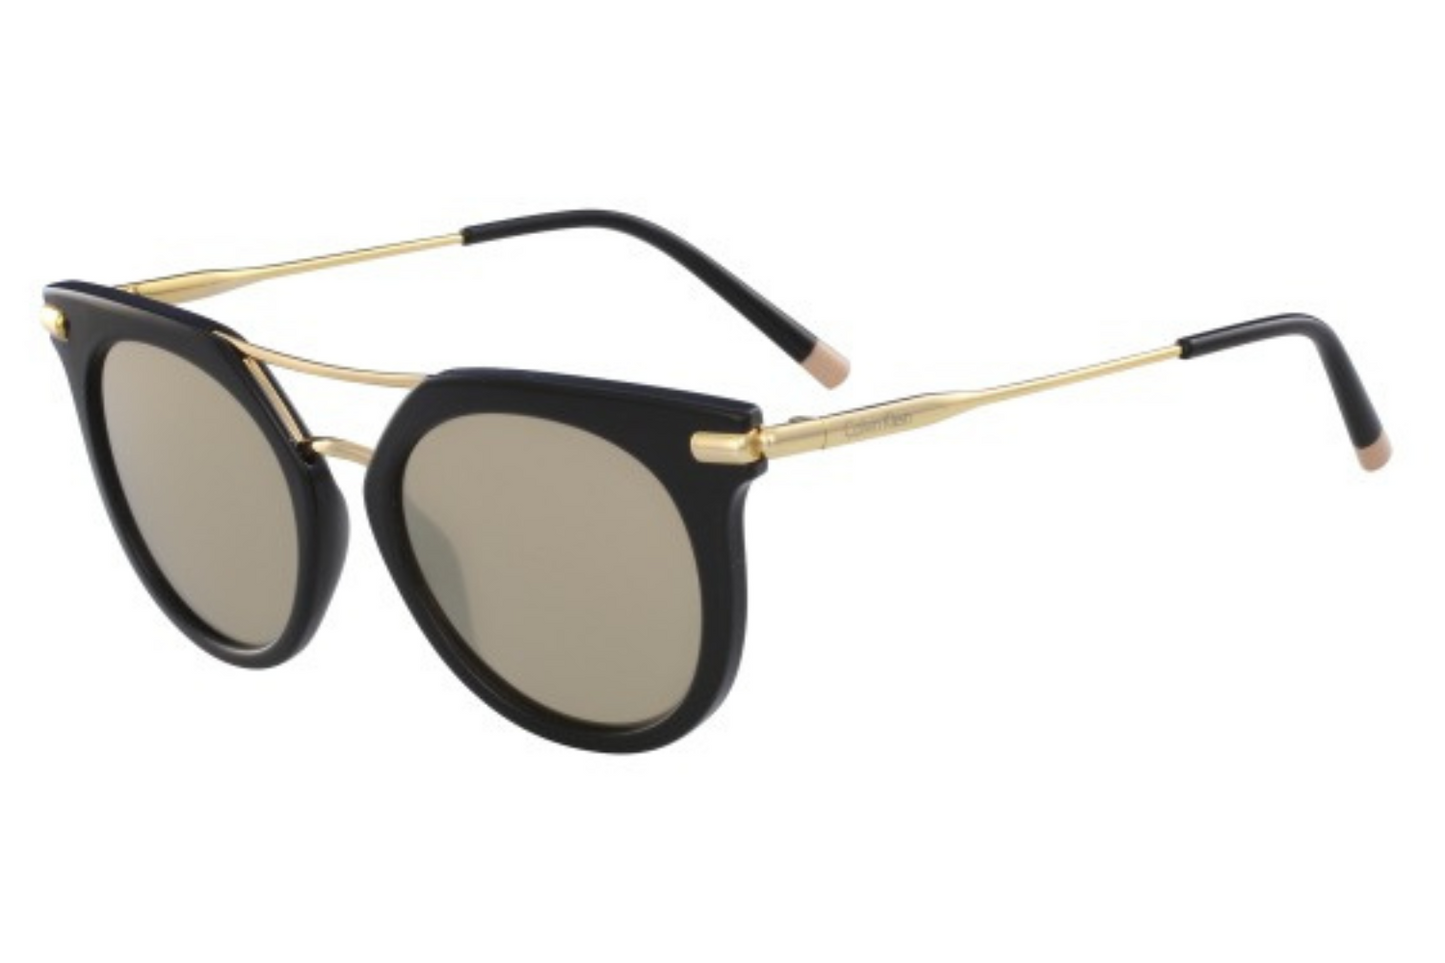 Calvin Klein Sunglasses CK1232